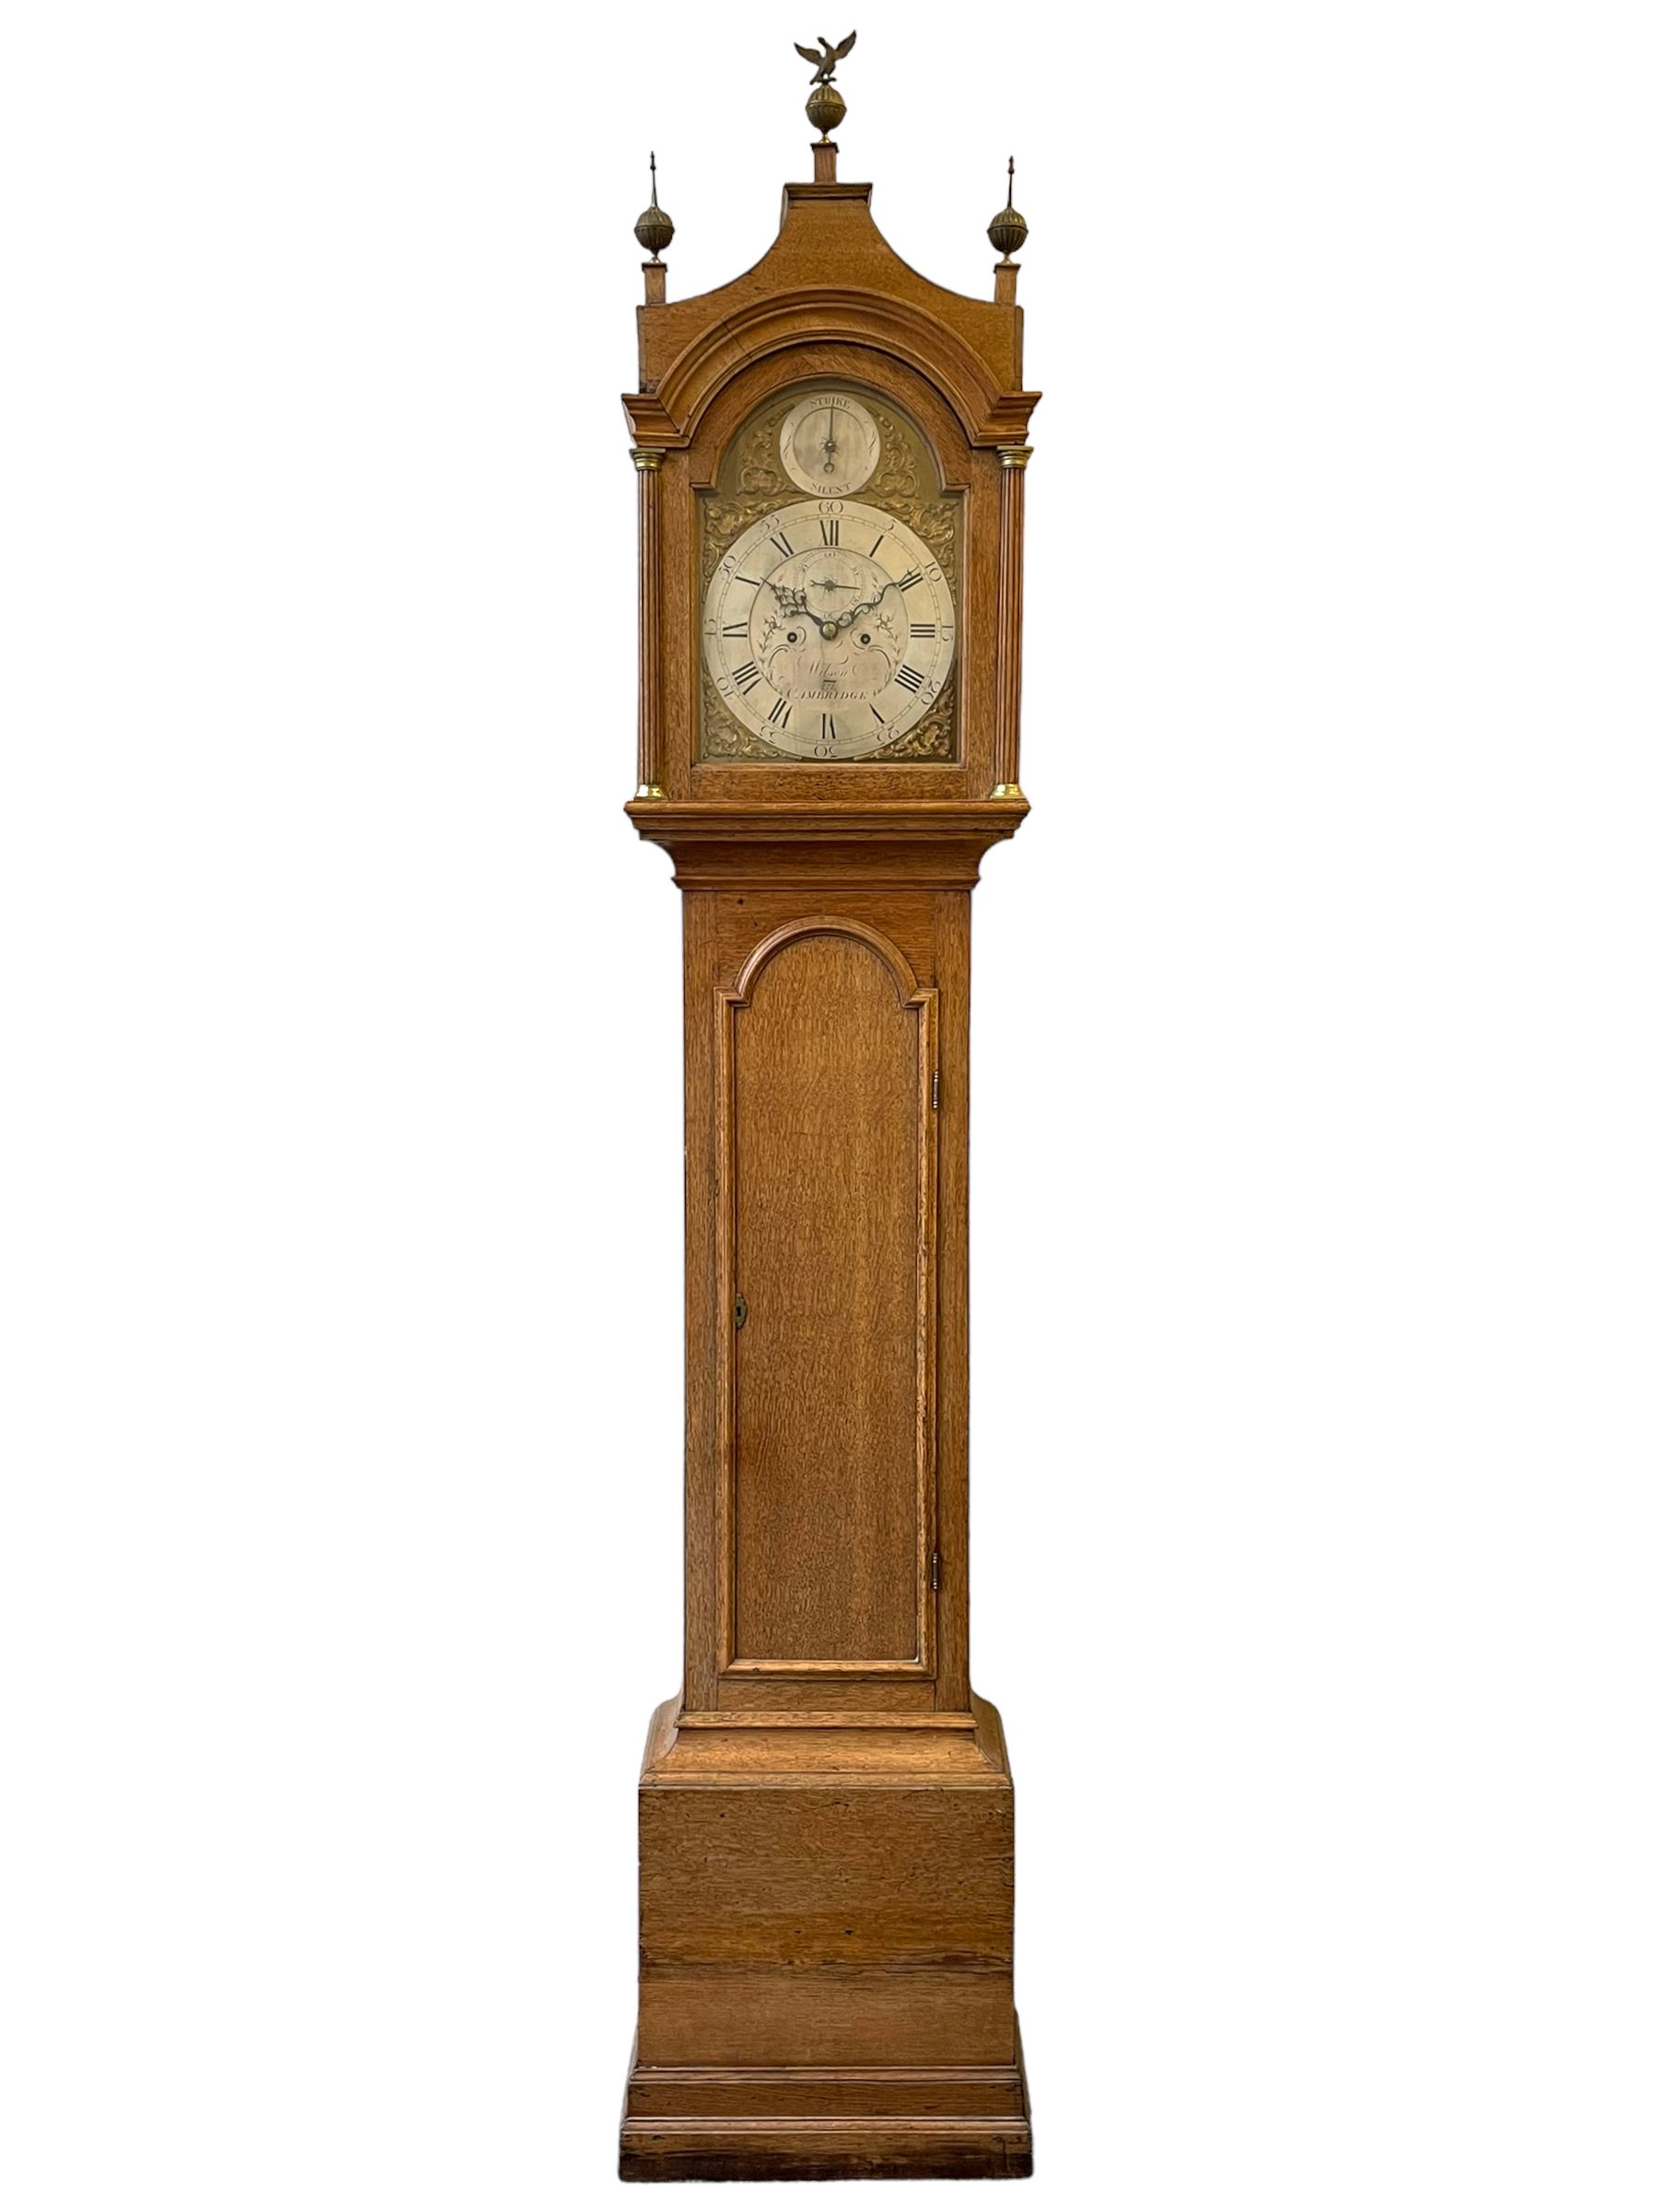 William Wilson of Cambridge - George III oak cased 8-day longcase clock